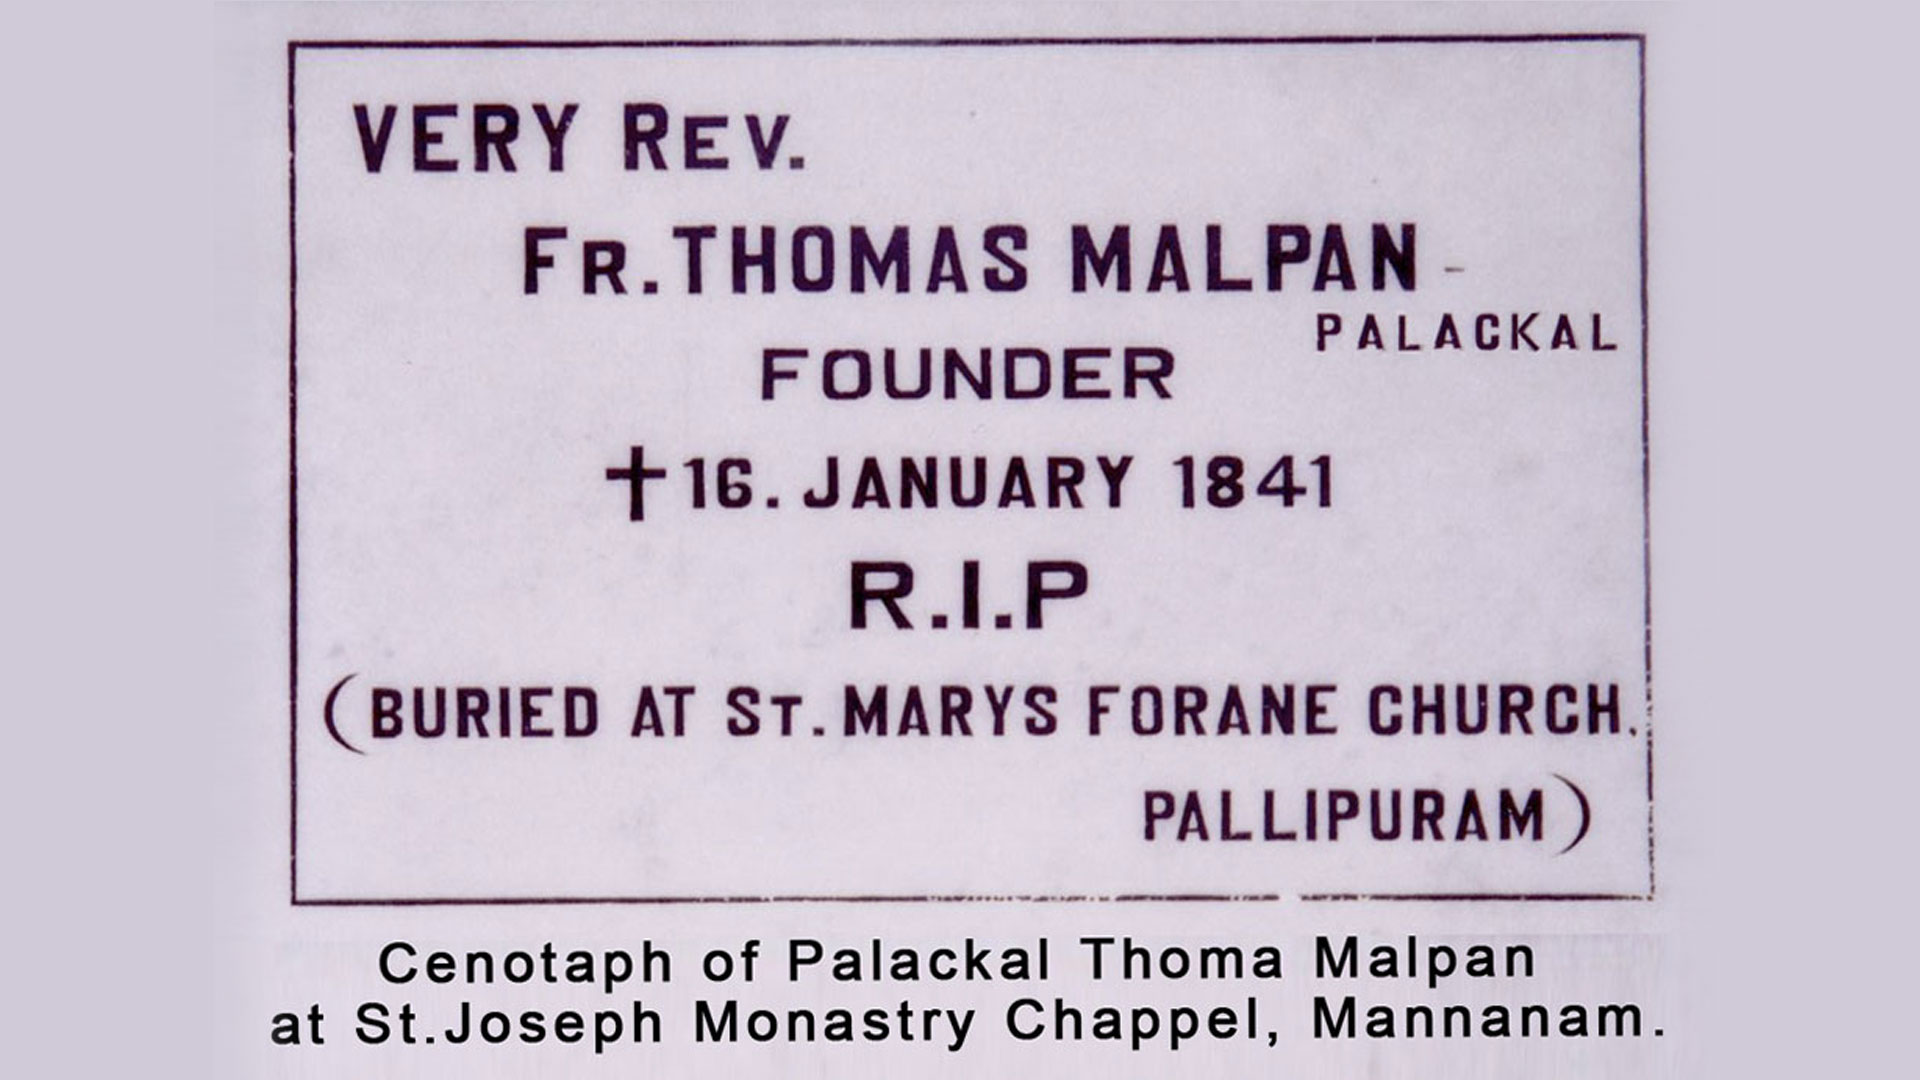 Cenotaph of palackal thoma malpan